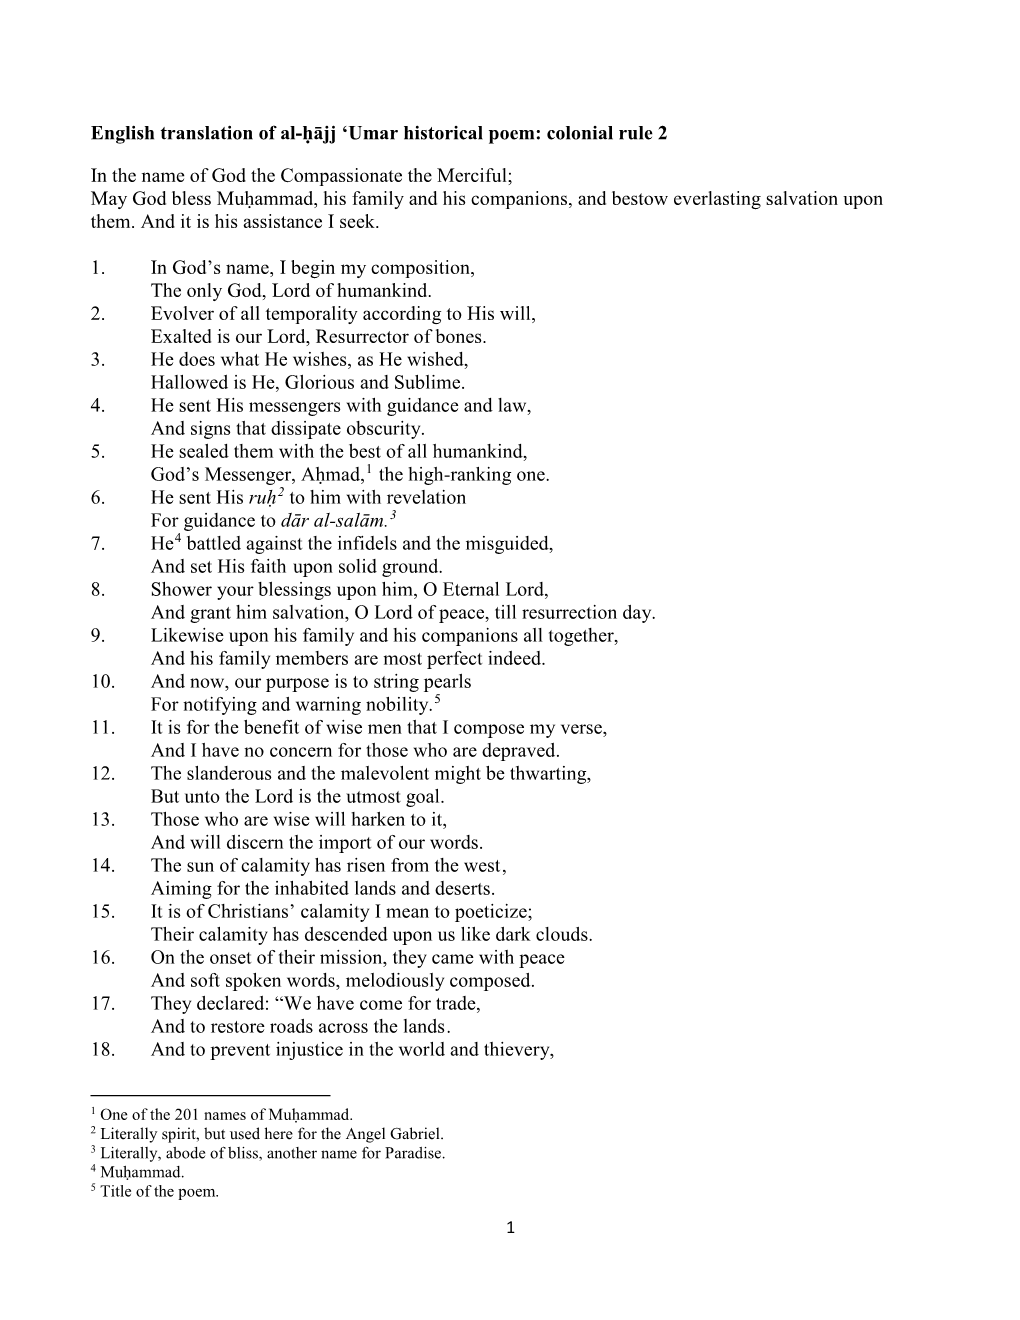 English Translation of Al-Ḥājj 'Umar Historical Poem: Colonial Rule 2 In